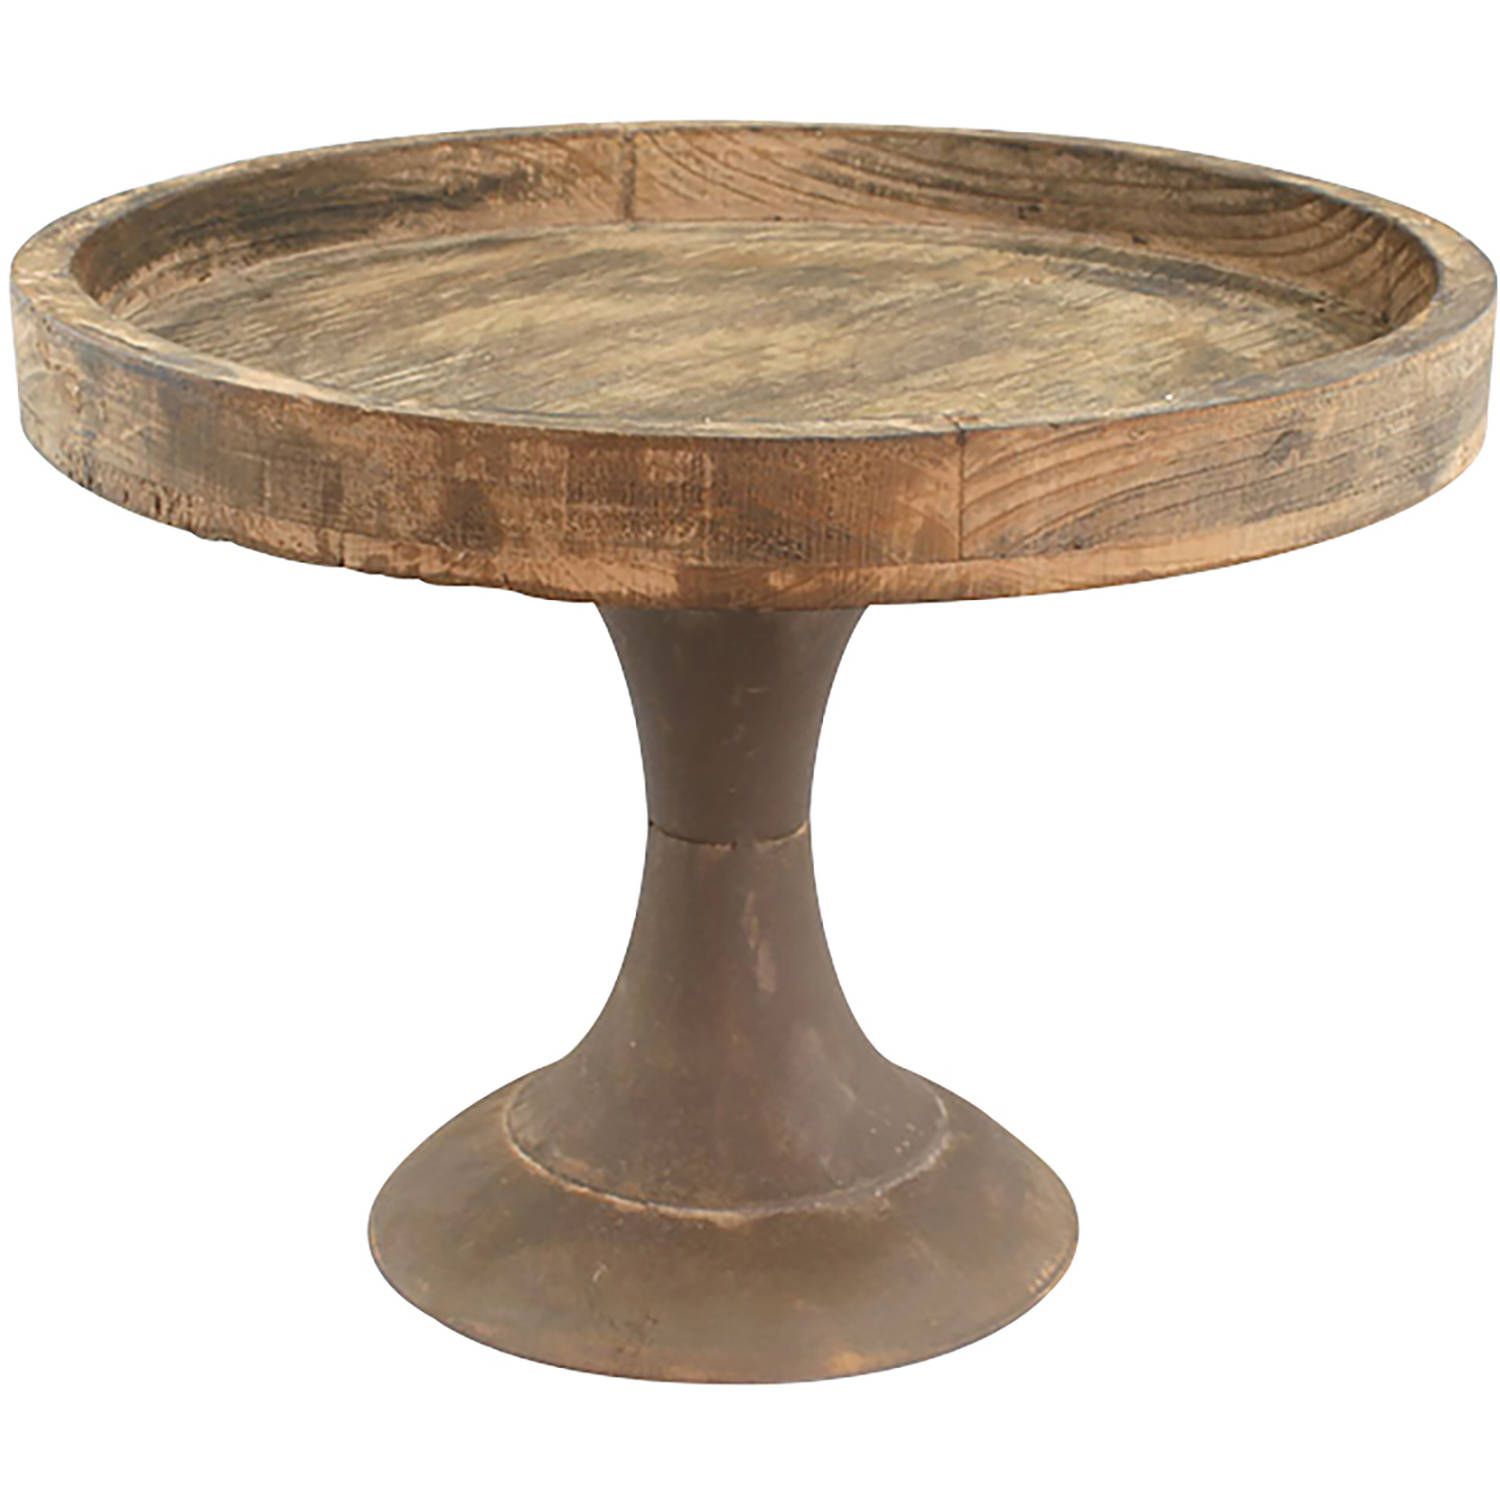 Stonebriar Rustic Worn Natural Wood and Metal Pedestal Tray | Walmart (US)